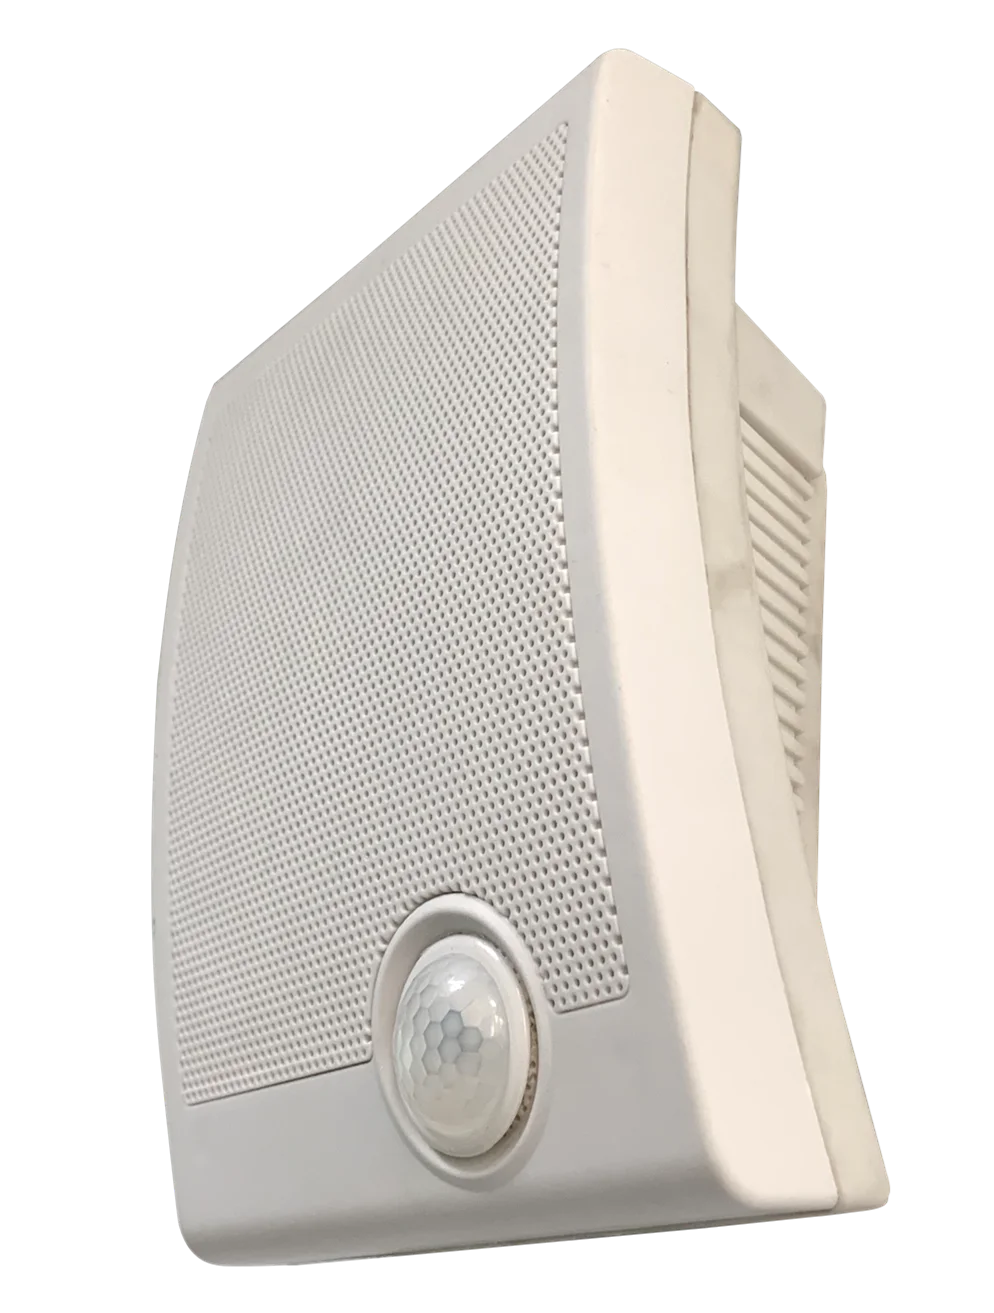 

Outdoor rainproof Wall Mount High Power Sensitive PIR Motion Sensor Scream Scary Voice Box for Halloween Props